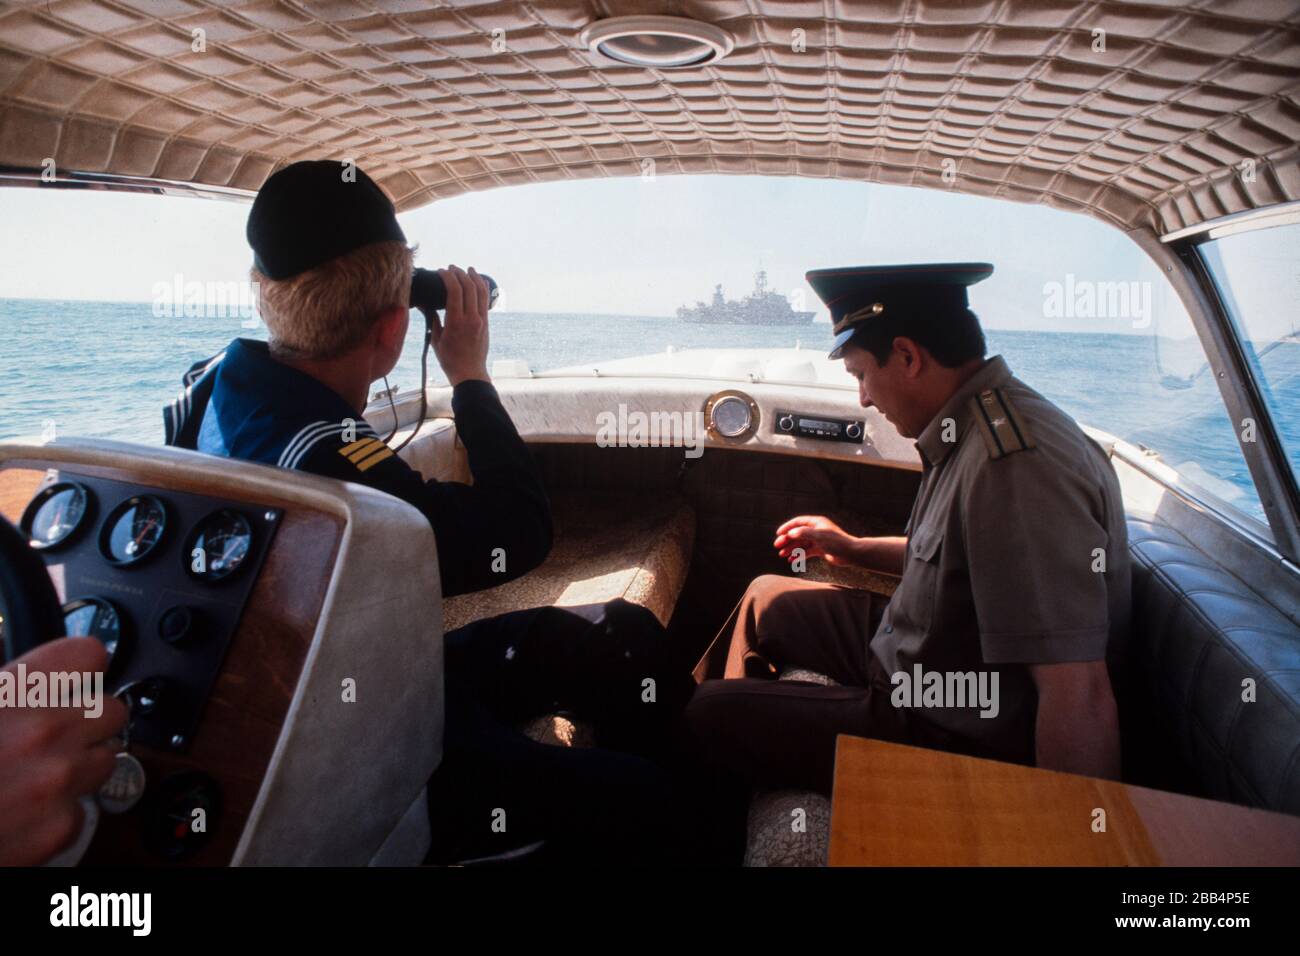 The Crimea, USSR, August 1990; Major Petre Gregoryivich Babura on a hydrofoil to meet a border parol vessel on the Black Sea. Stock Photo